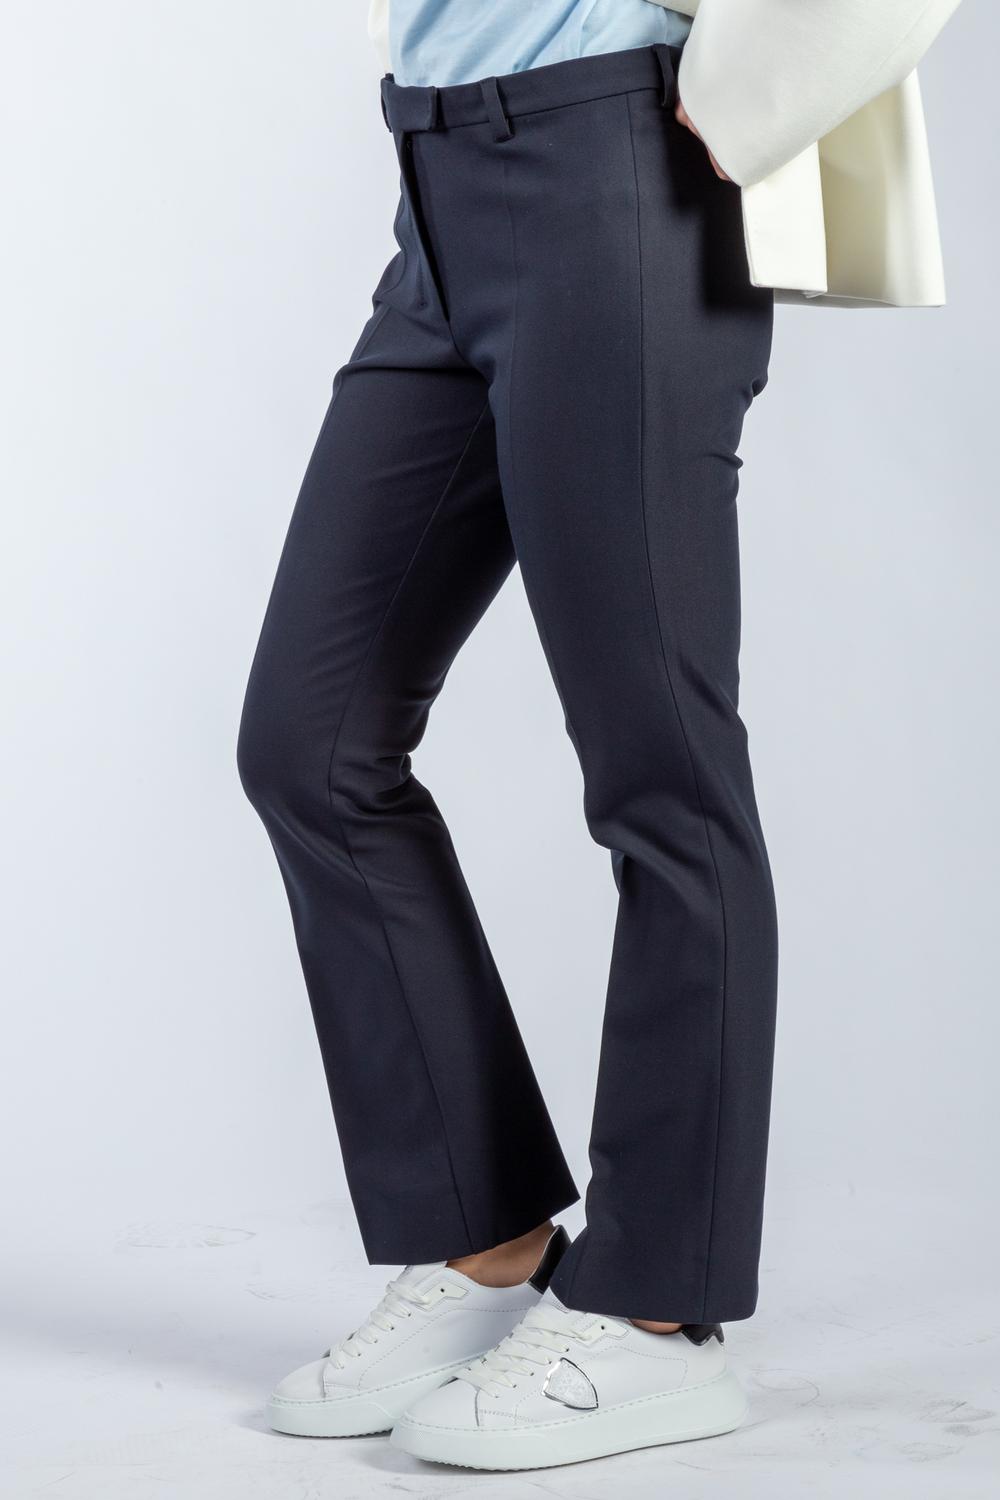 Max Mara 'S - Pantalone Cropped Blu Donna - FATINA 002